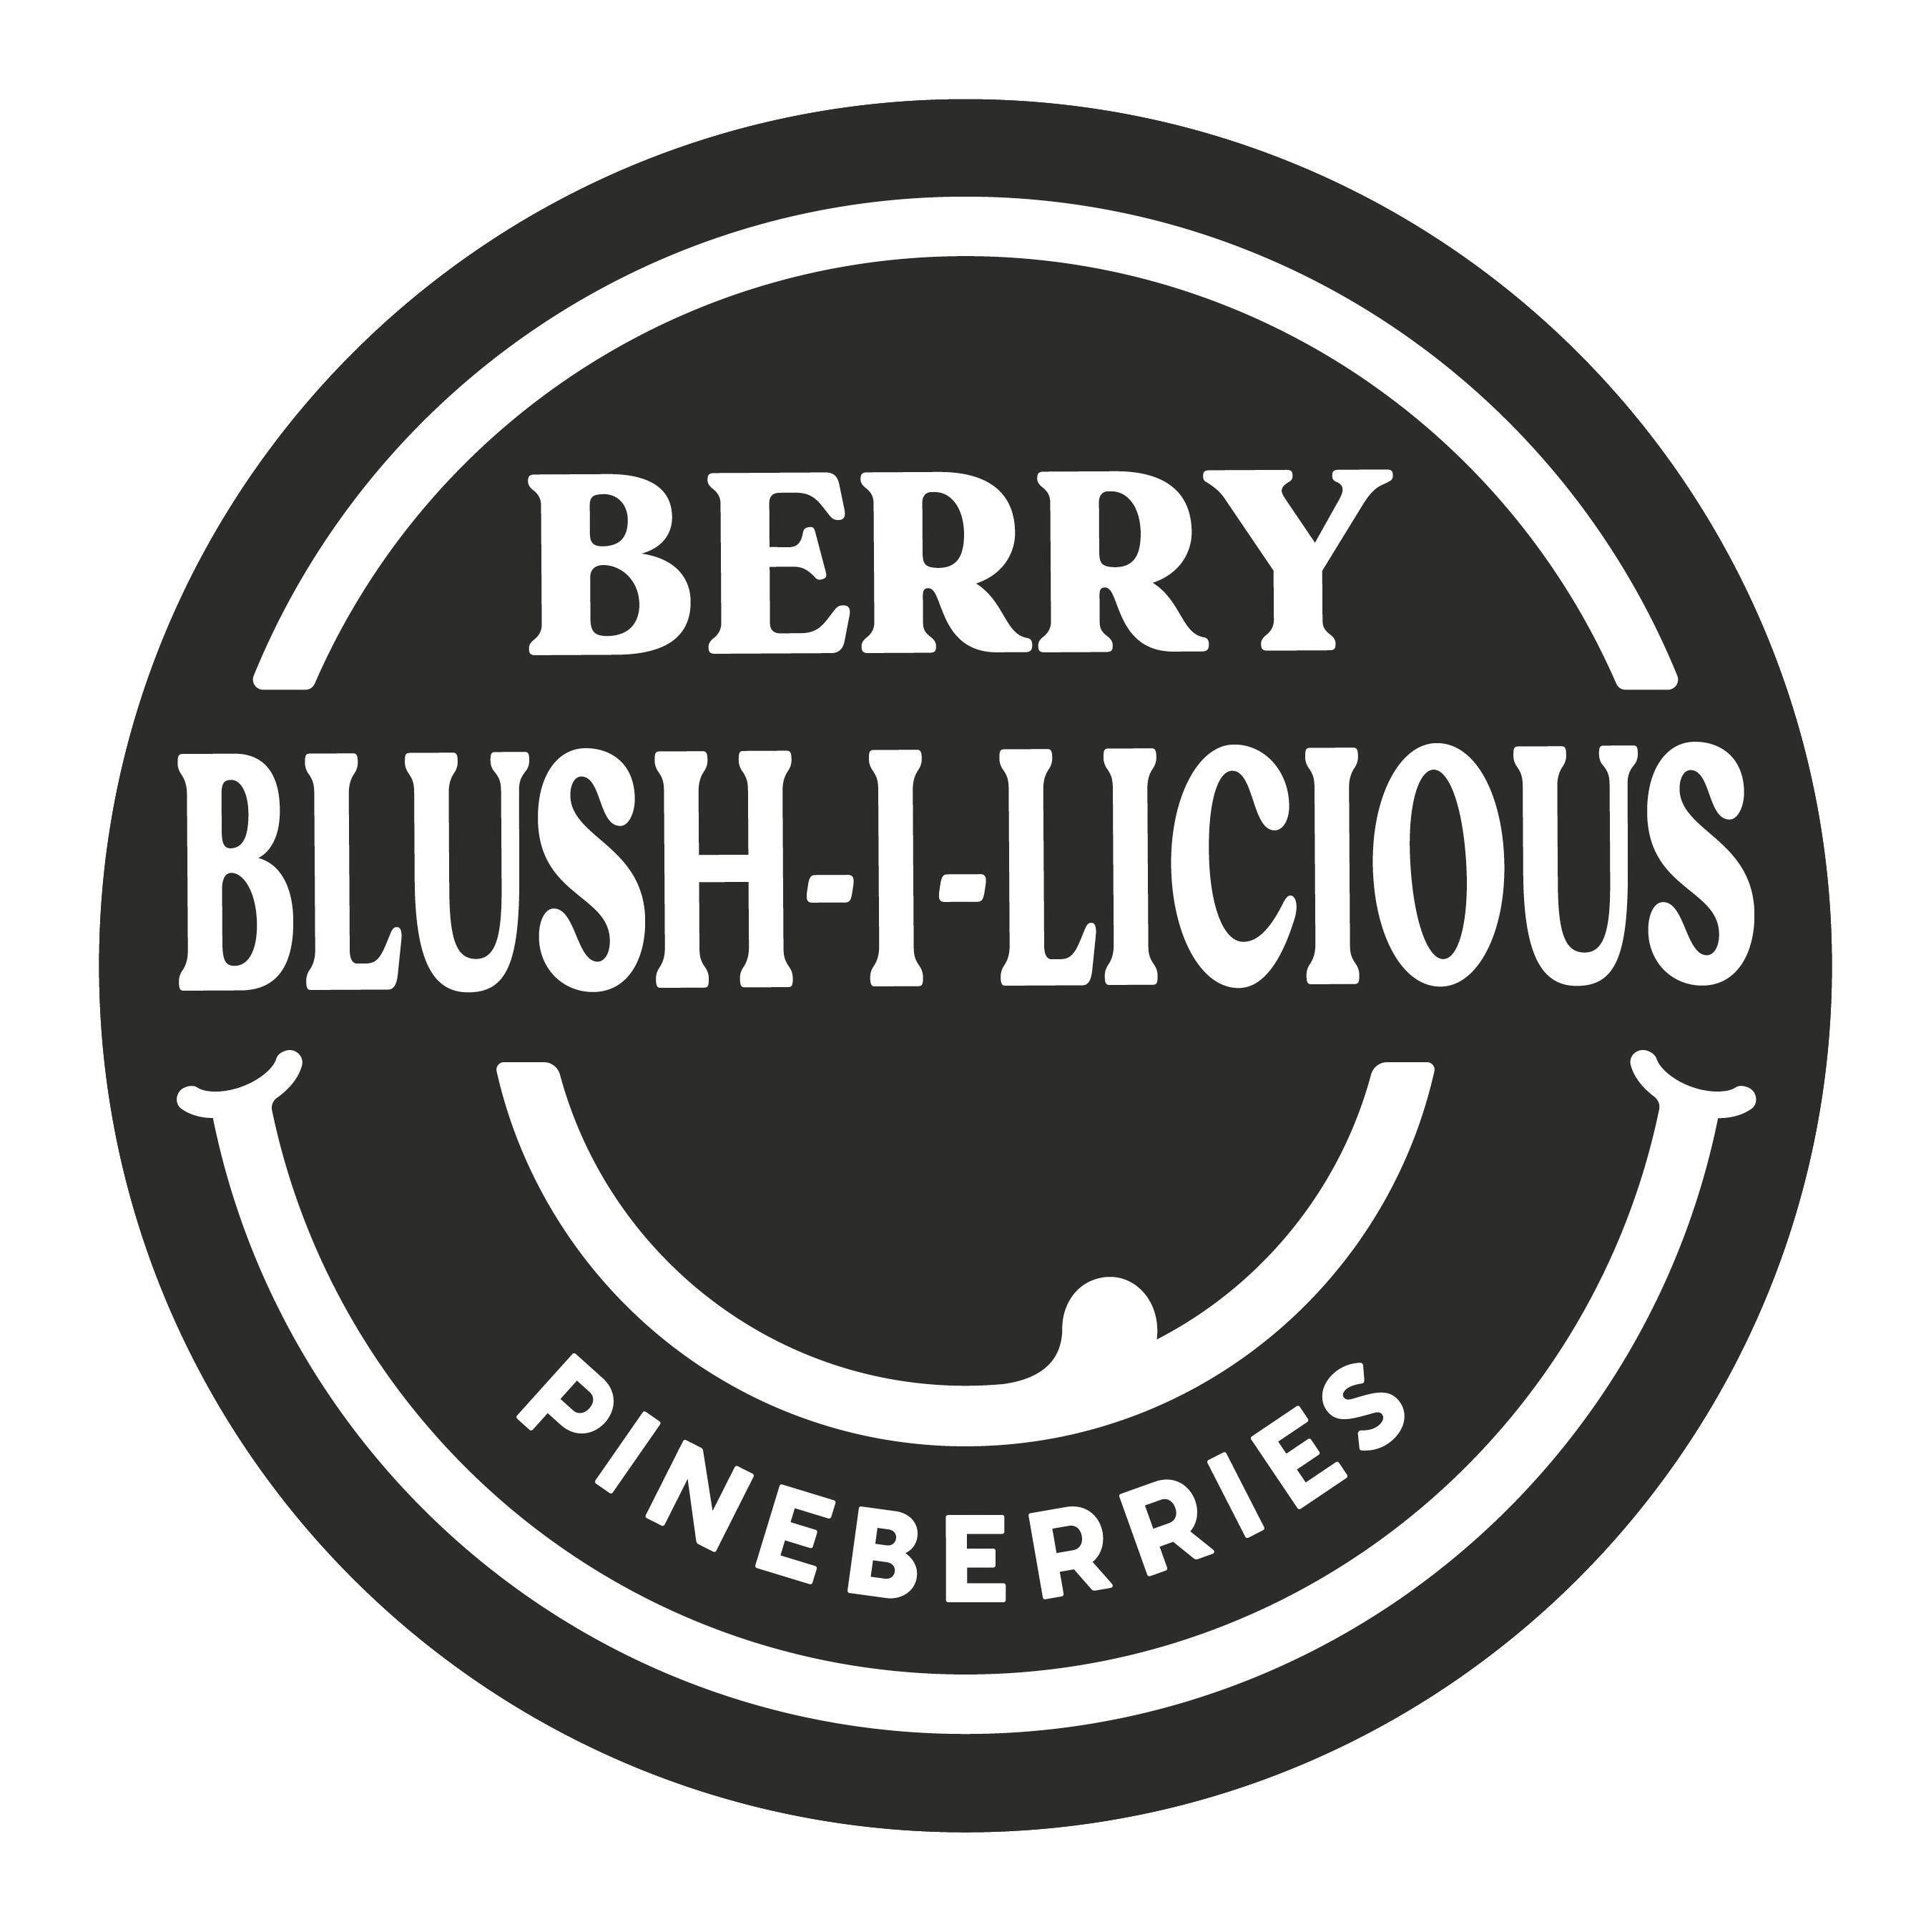  BERRY BLUSH-I-LICIOUS PINEBERRIES